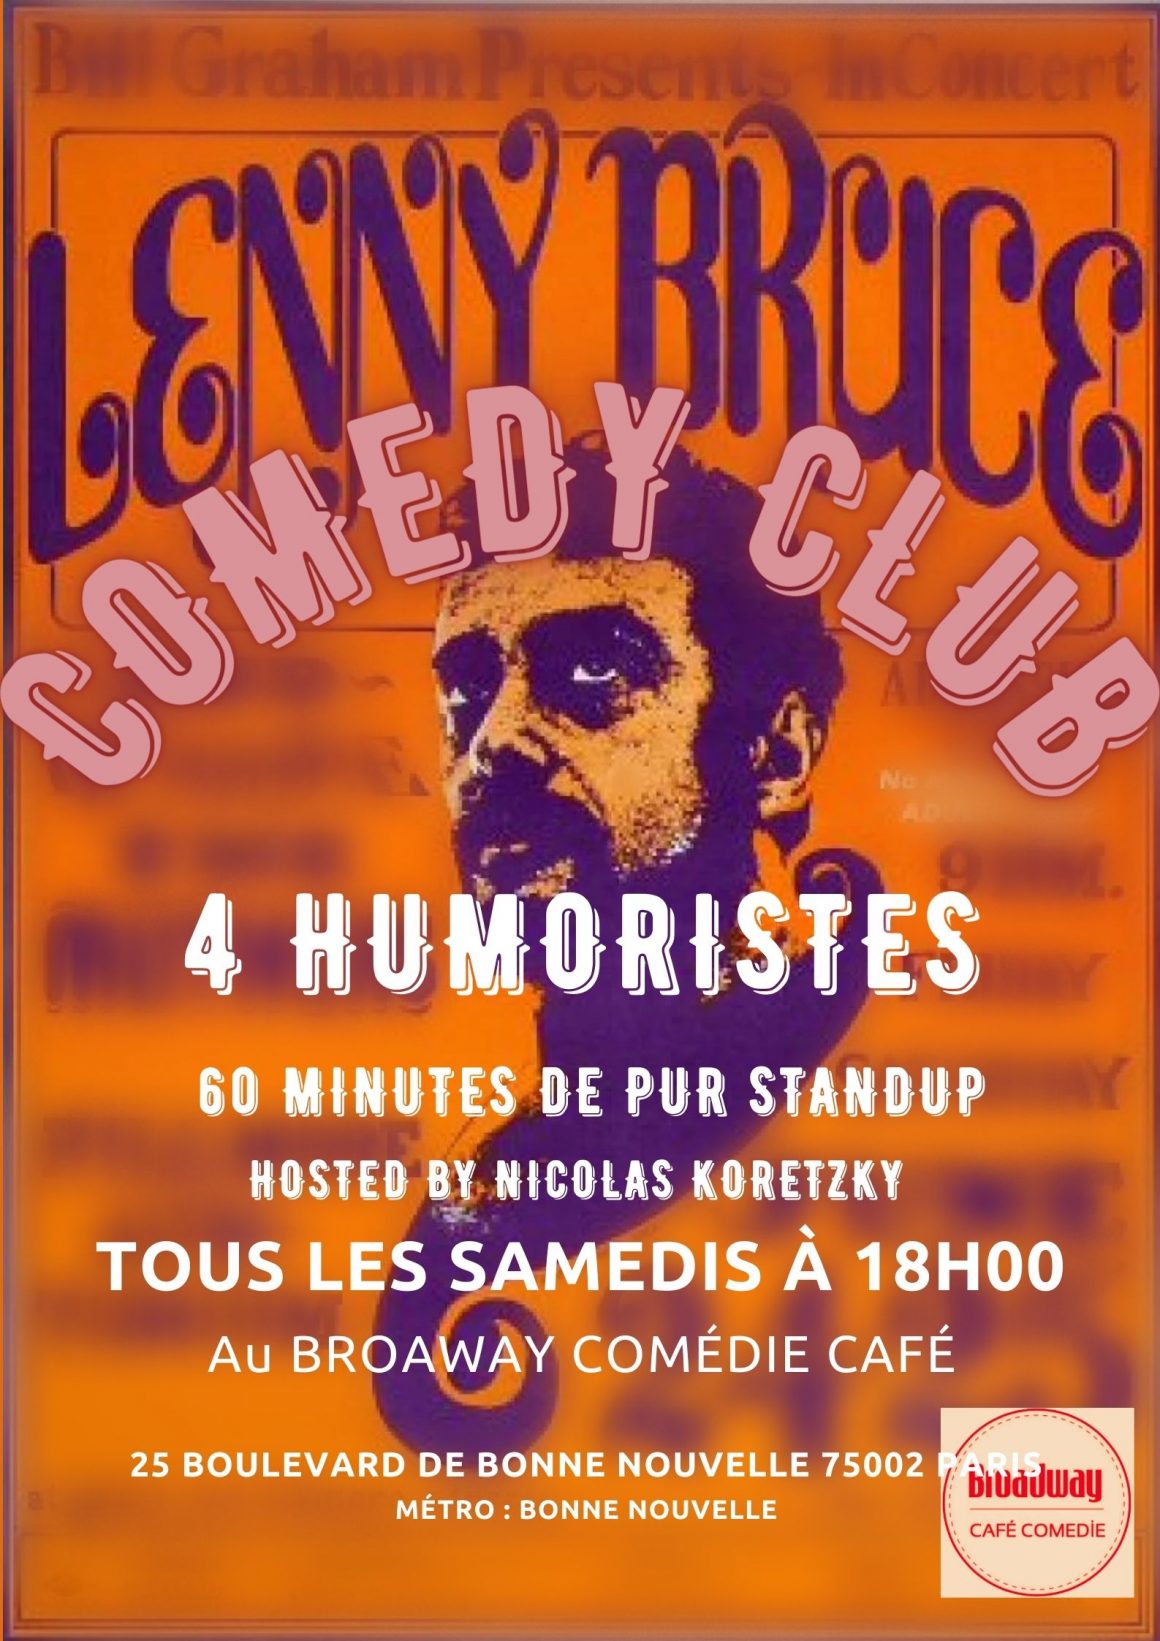 Lenny Bruce Comedy